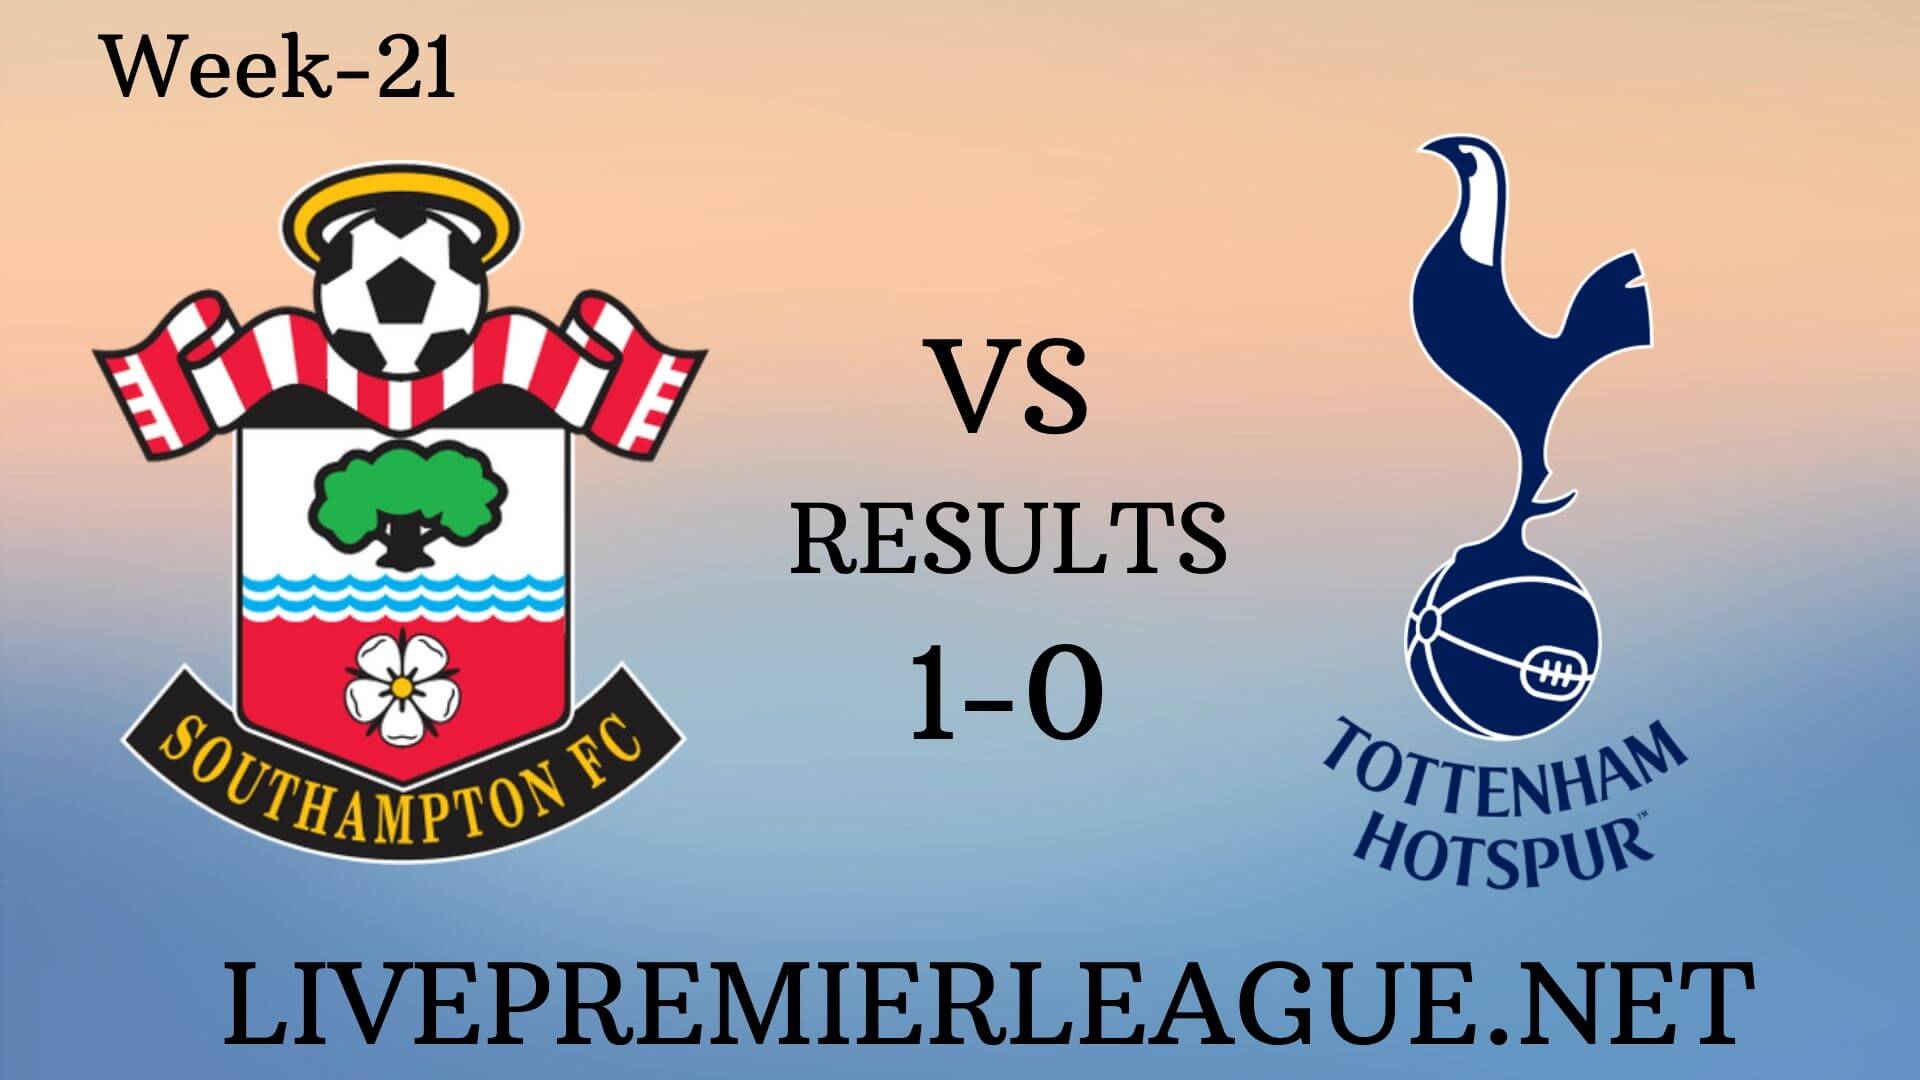 Southampton Vs Tottenham Hotspur | Week 21 Result 2019